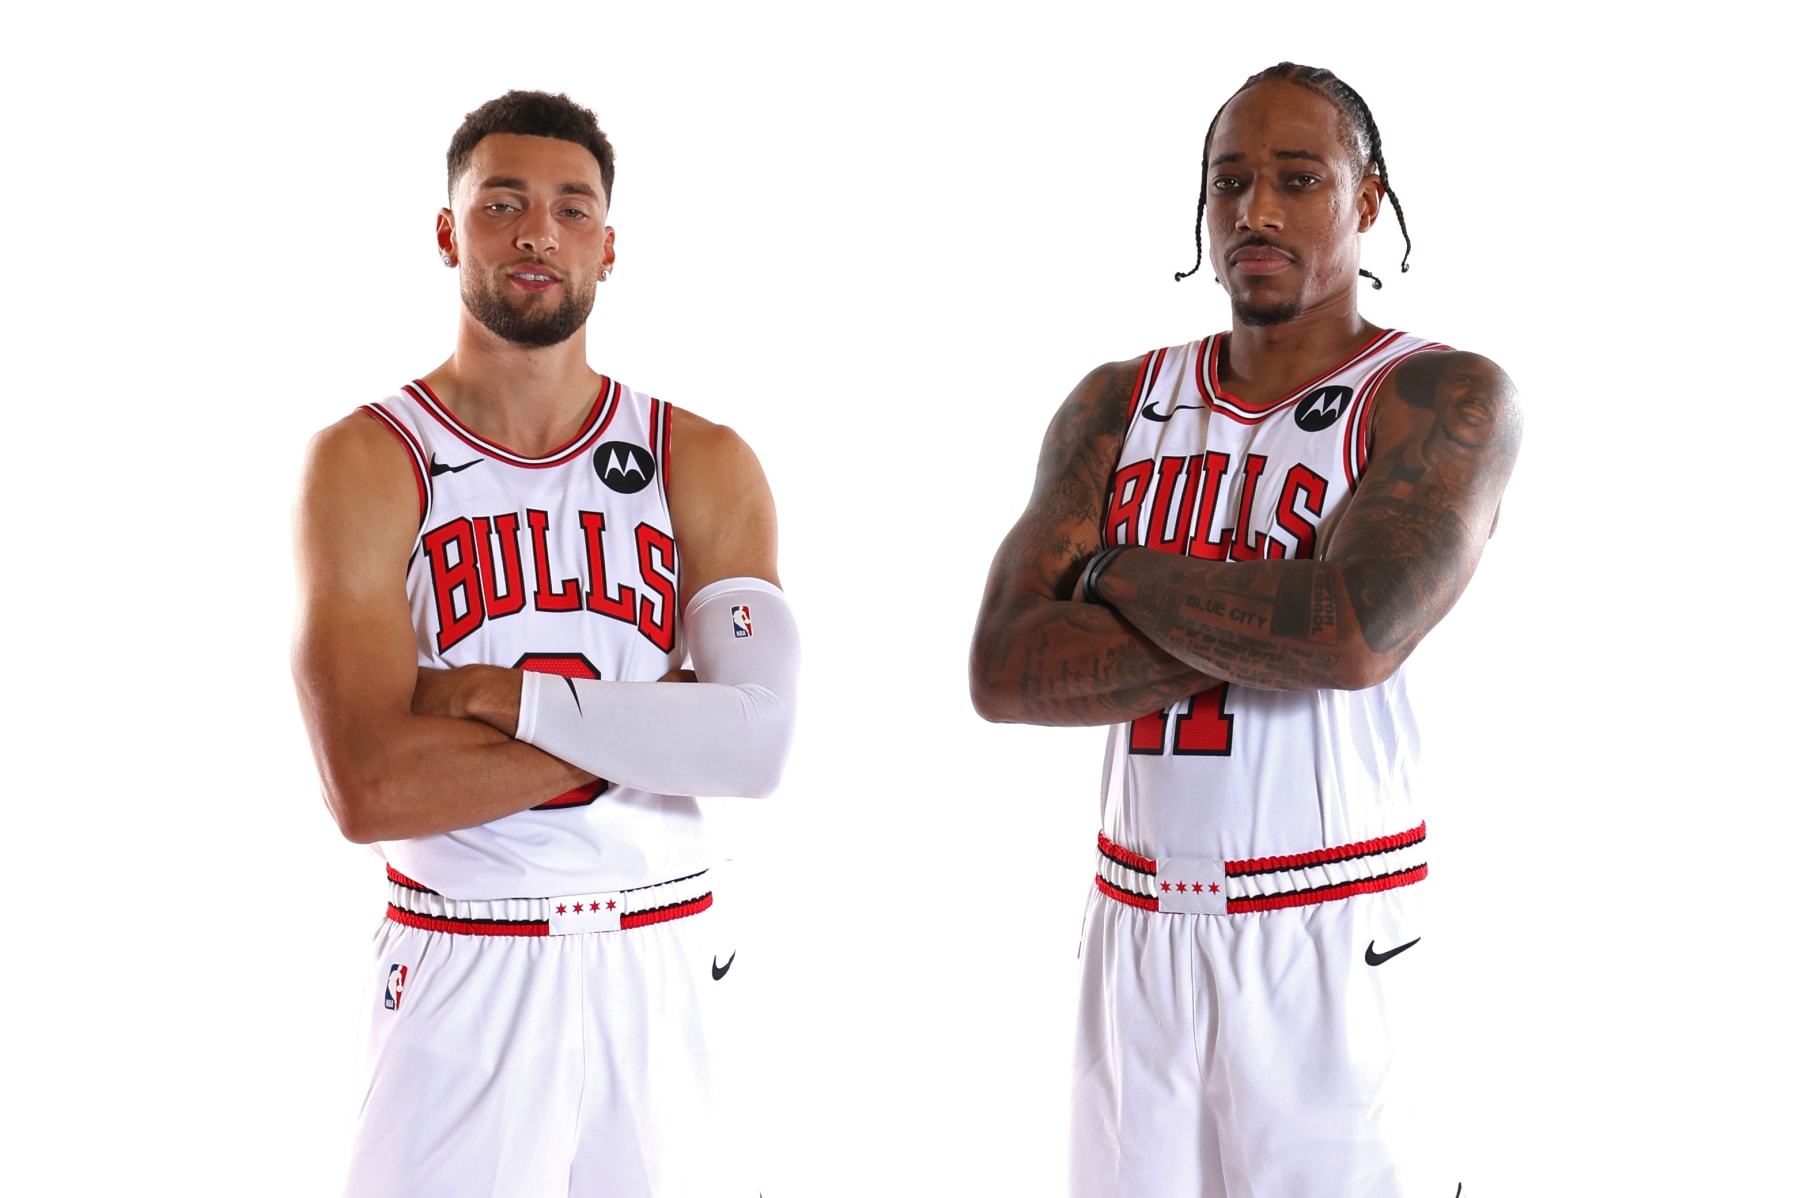 Chicago Bulls 2022-2023 season preview